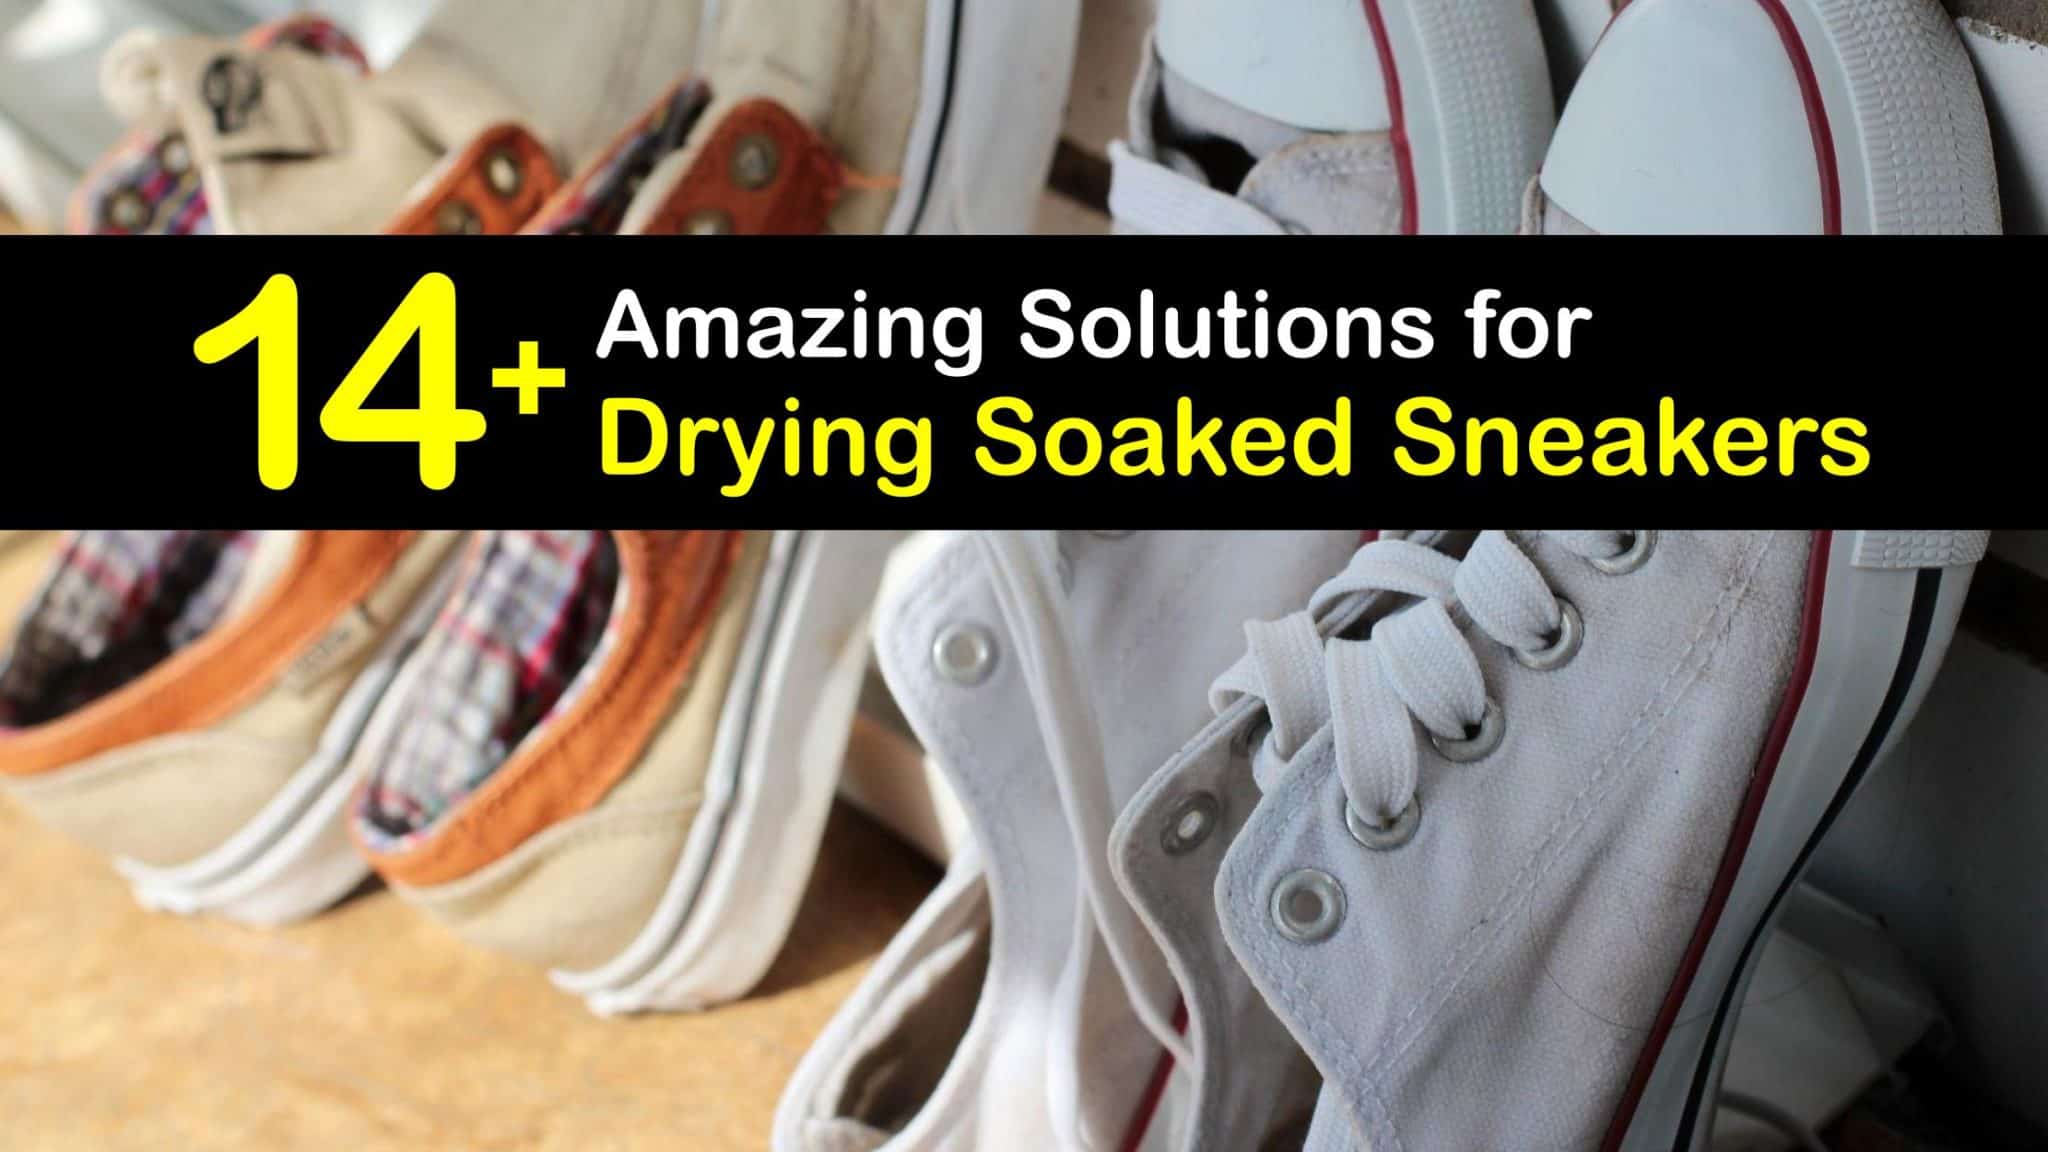 Sneaker Drying Strategies - Stunning Ways to Dry Wet Sneakers